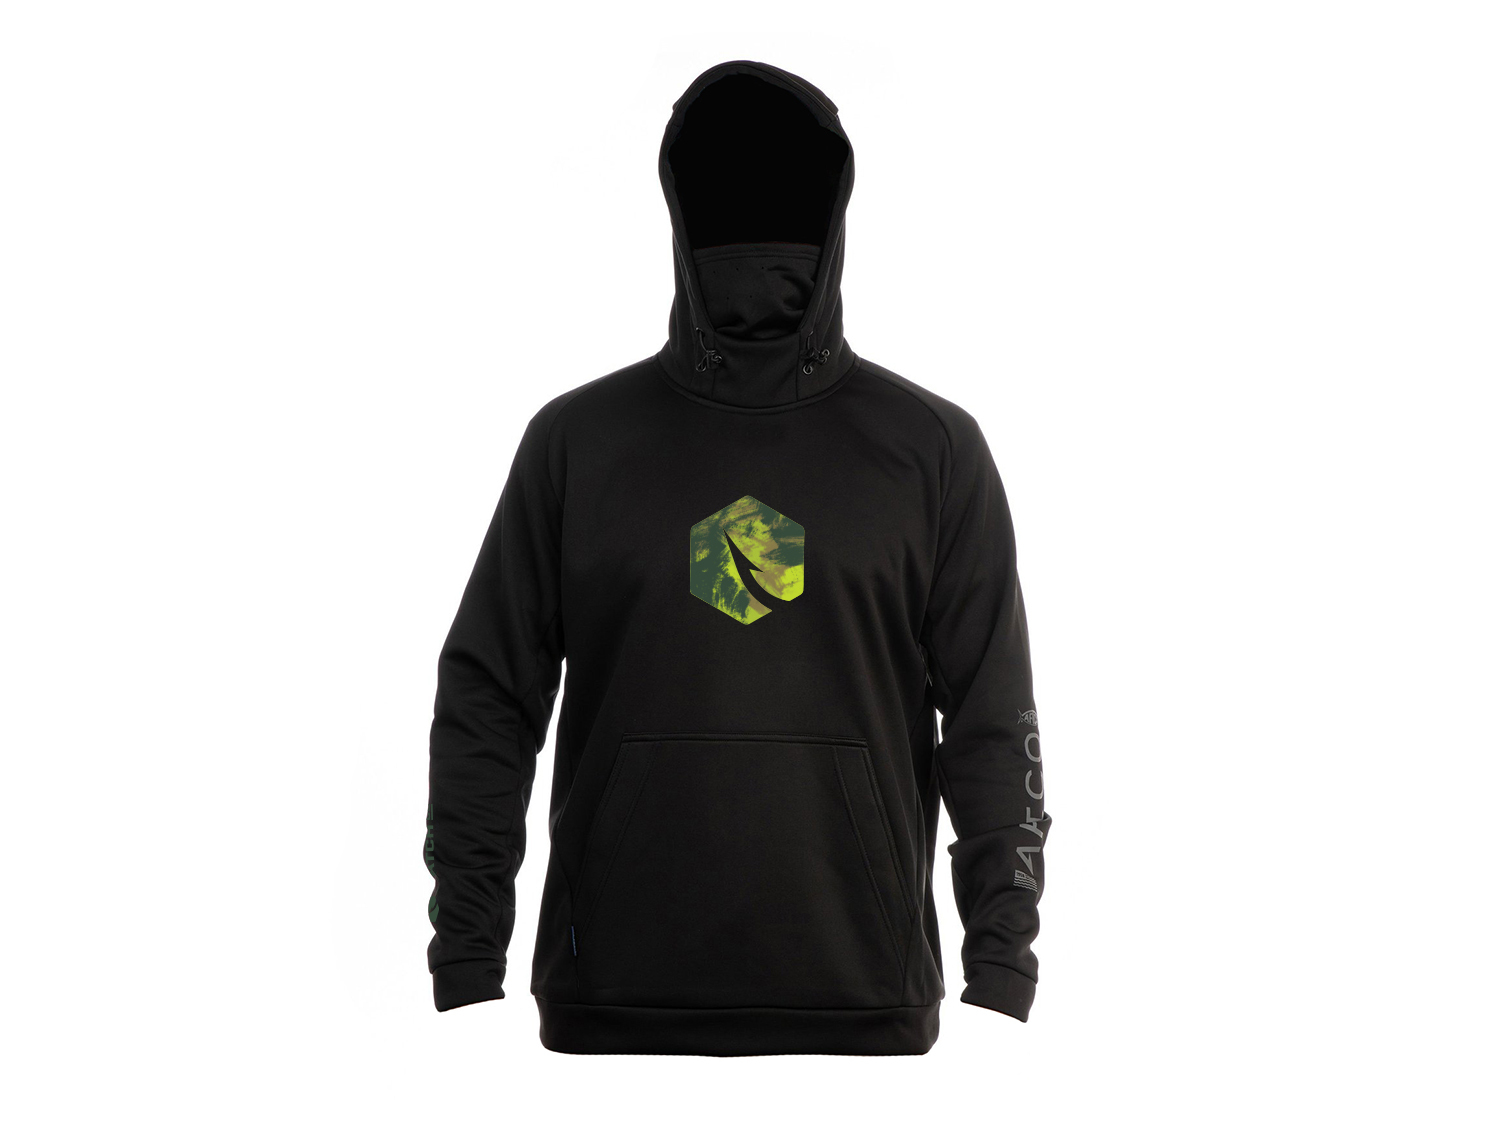 Aftco + Catch Co. Reaper Sweatshirt